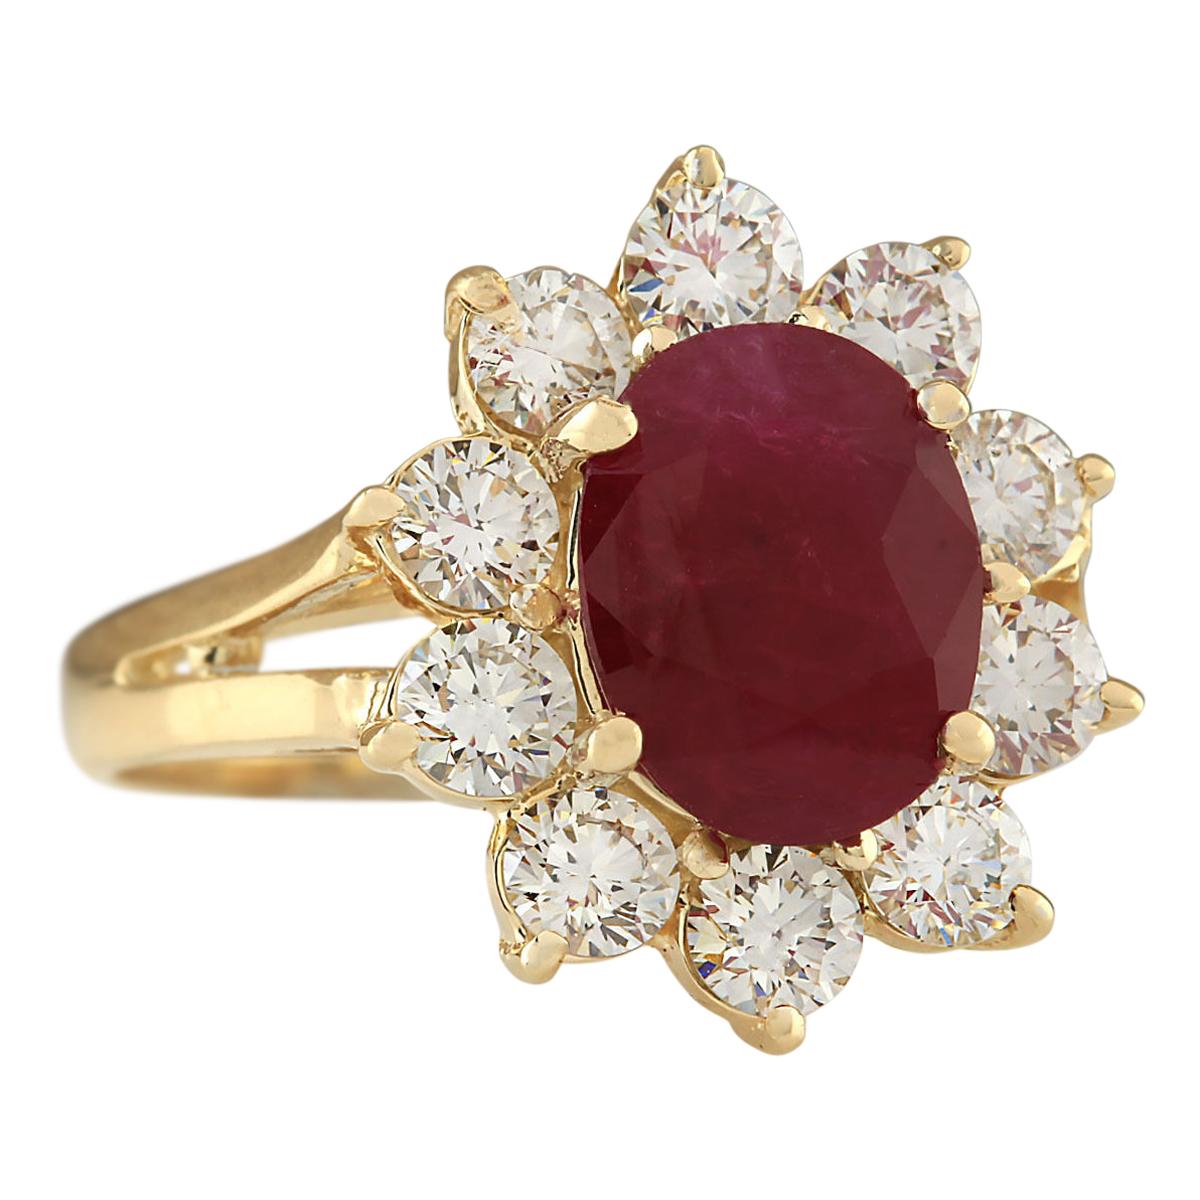 3.55 Carat Natural Ruby 14 Karat Yellow Gold Diamond Ring
Stamped: 14K Yellow Gold
Total Ring Weight: 4.5 Grams
Total Natural Ruby Weight is 2.45 Carat (Measures: 9.00x7.00 mm)
Color: Red
Total Natural Diamond Weight is 1.10 Carat
Color: F-G,